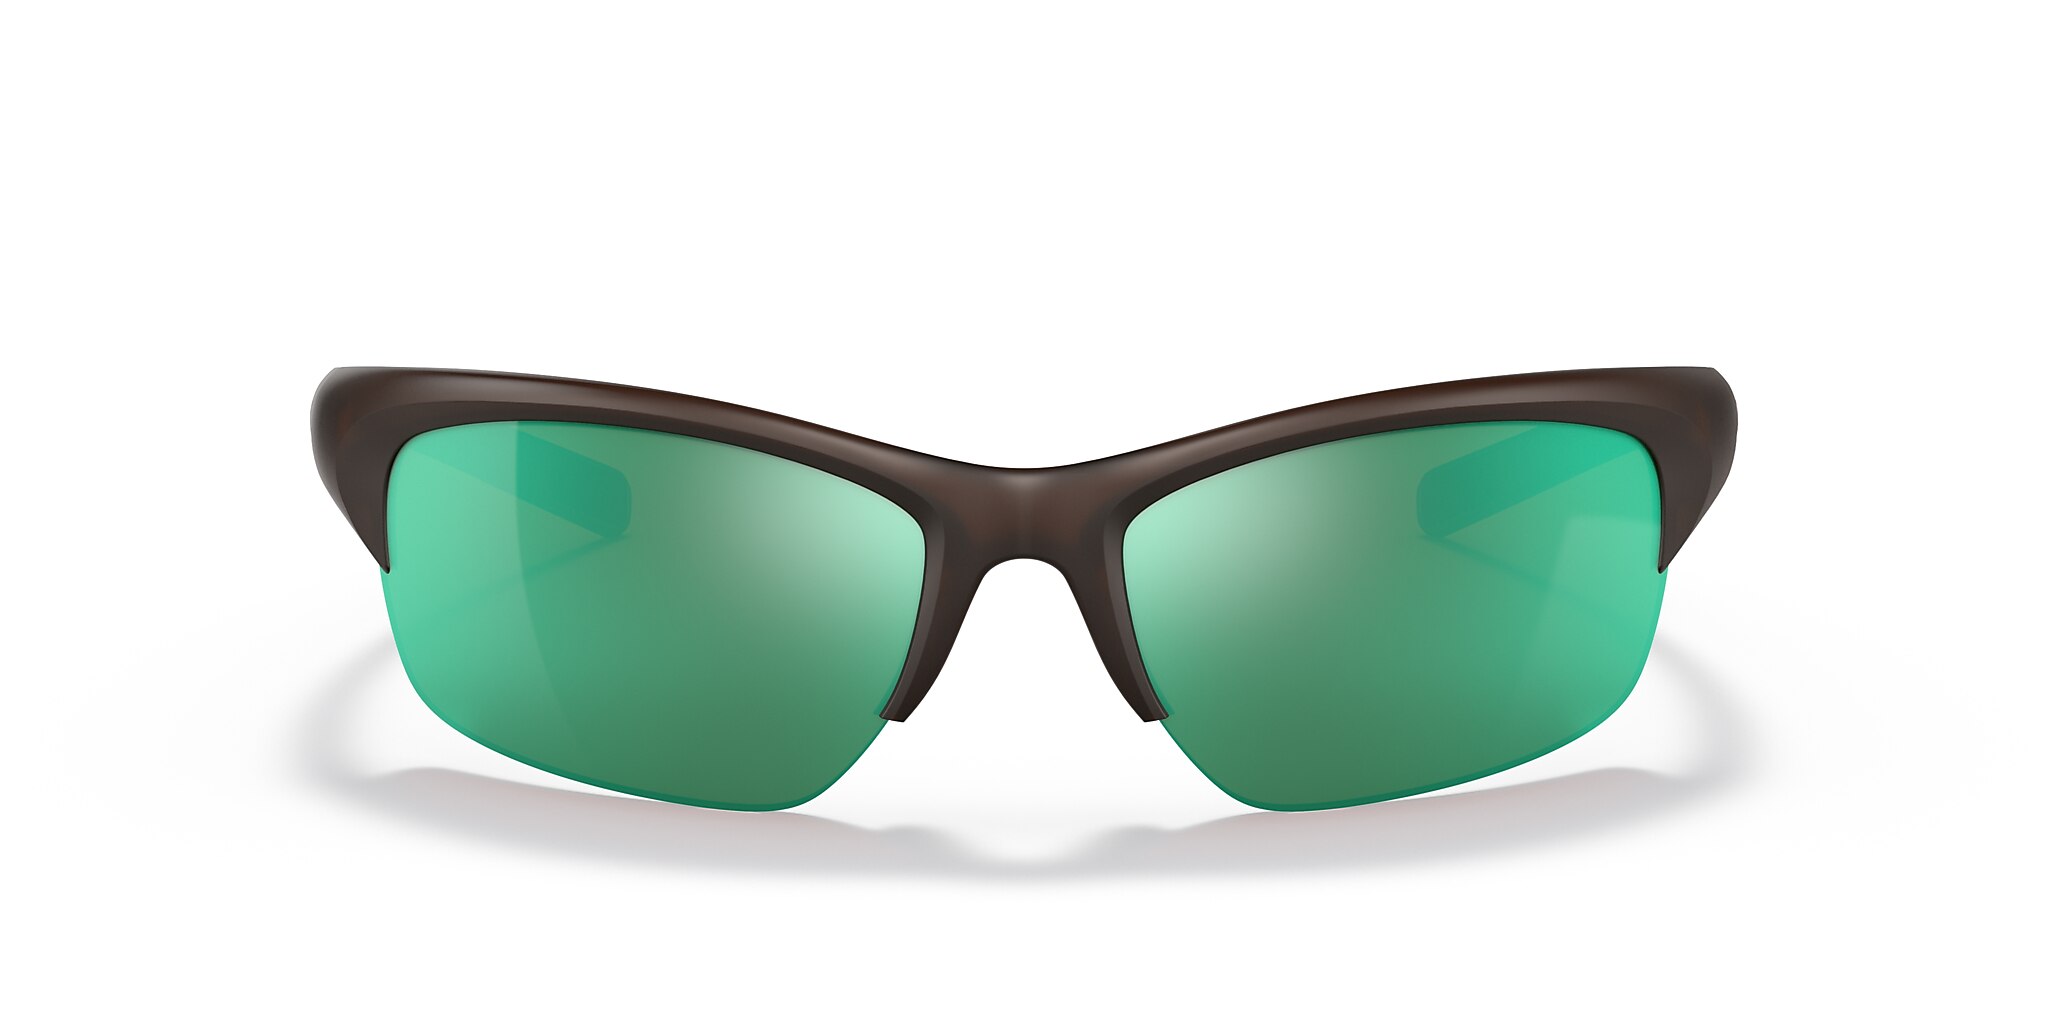 Endura XP Sunglasses in Green Reflex | Native Eyewear®